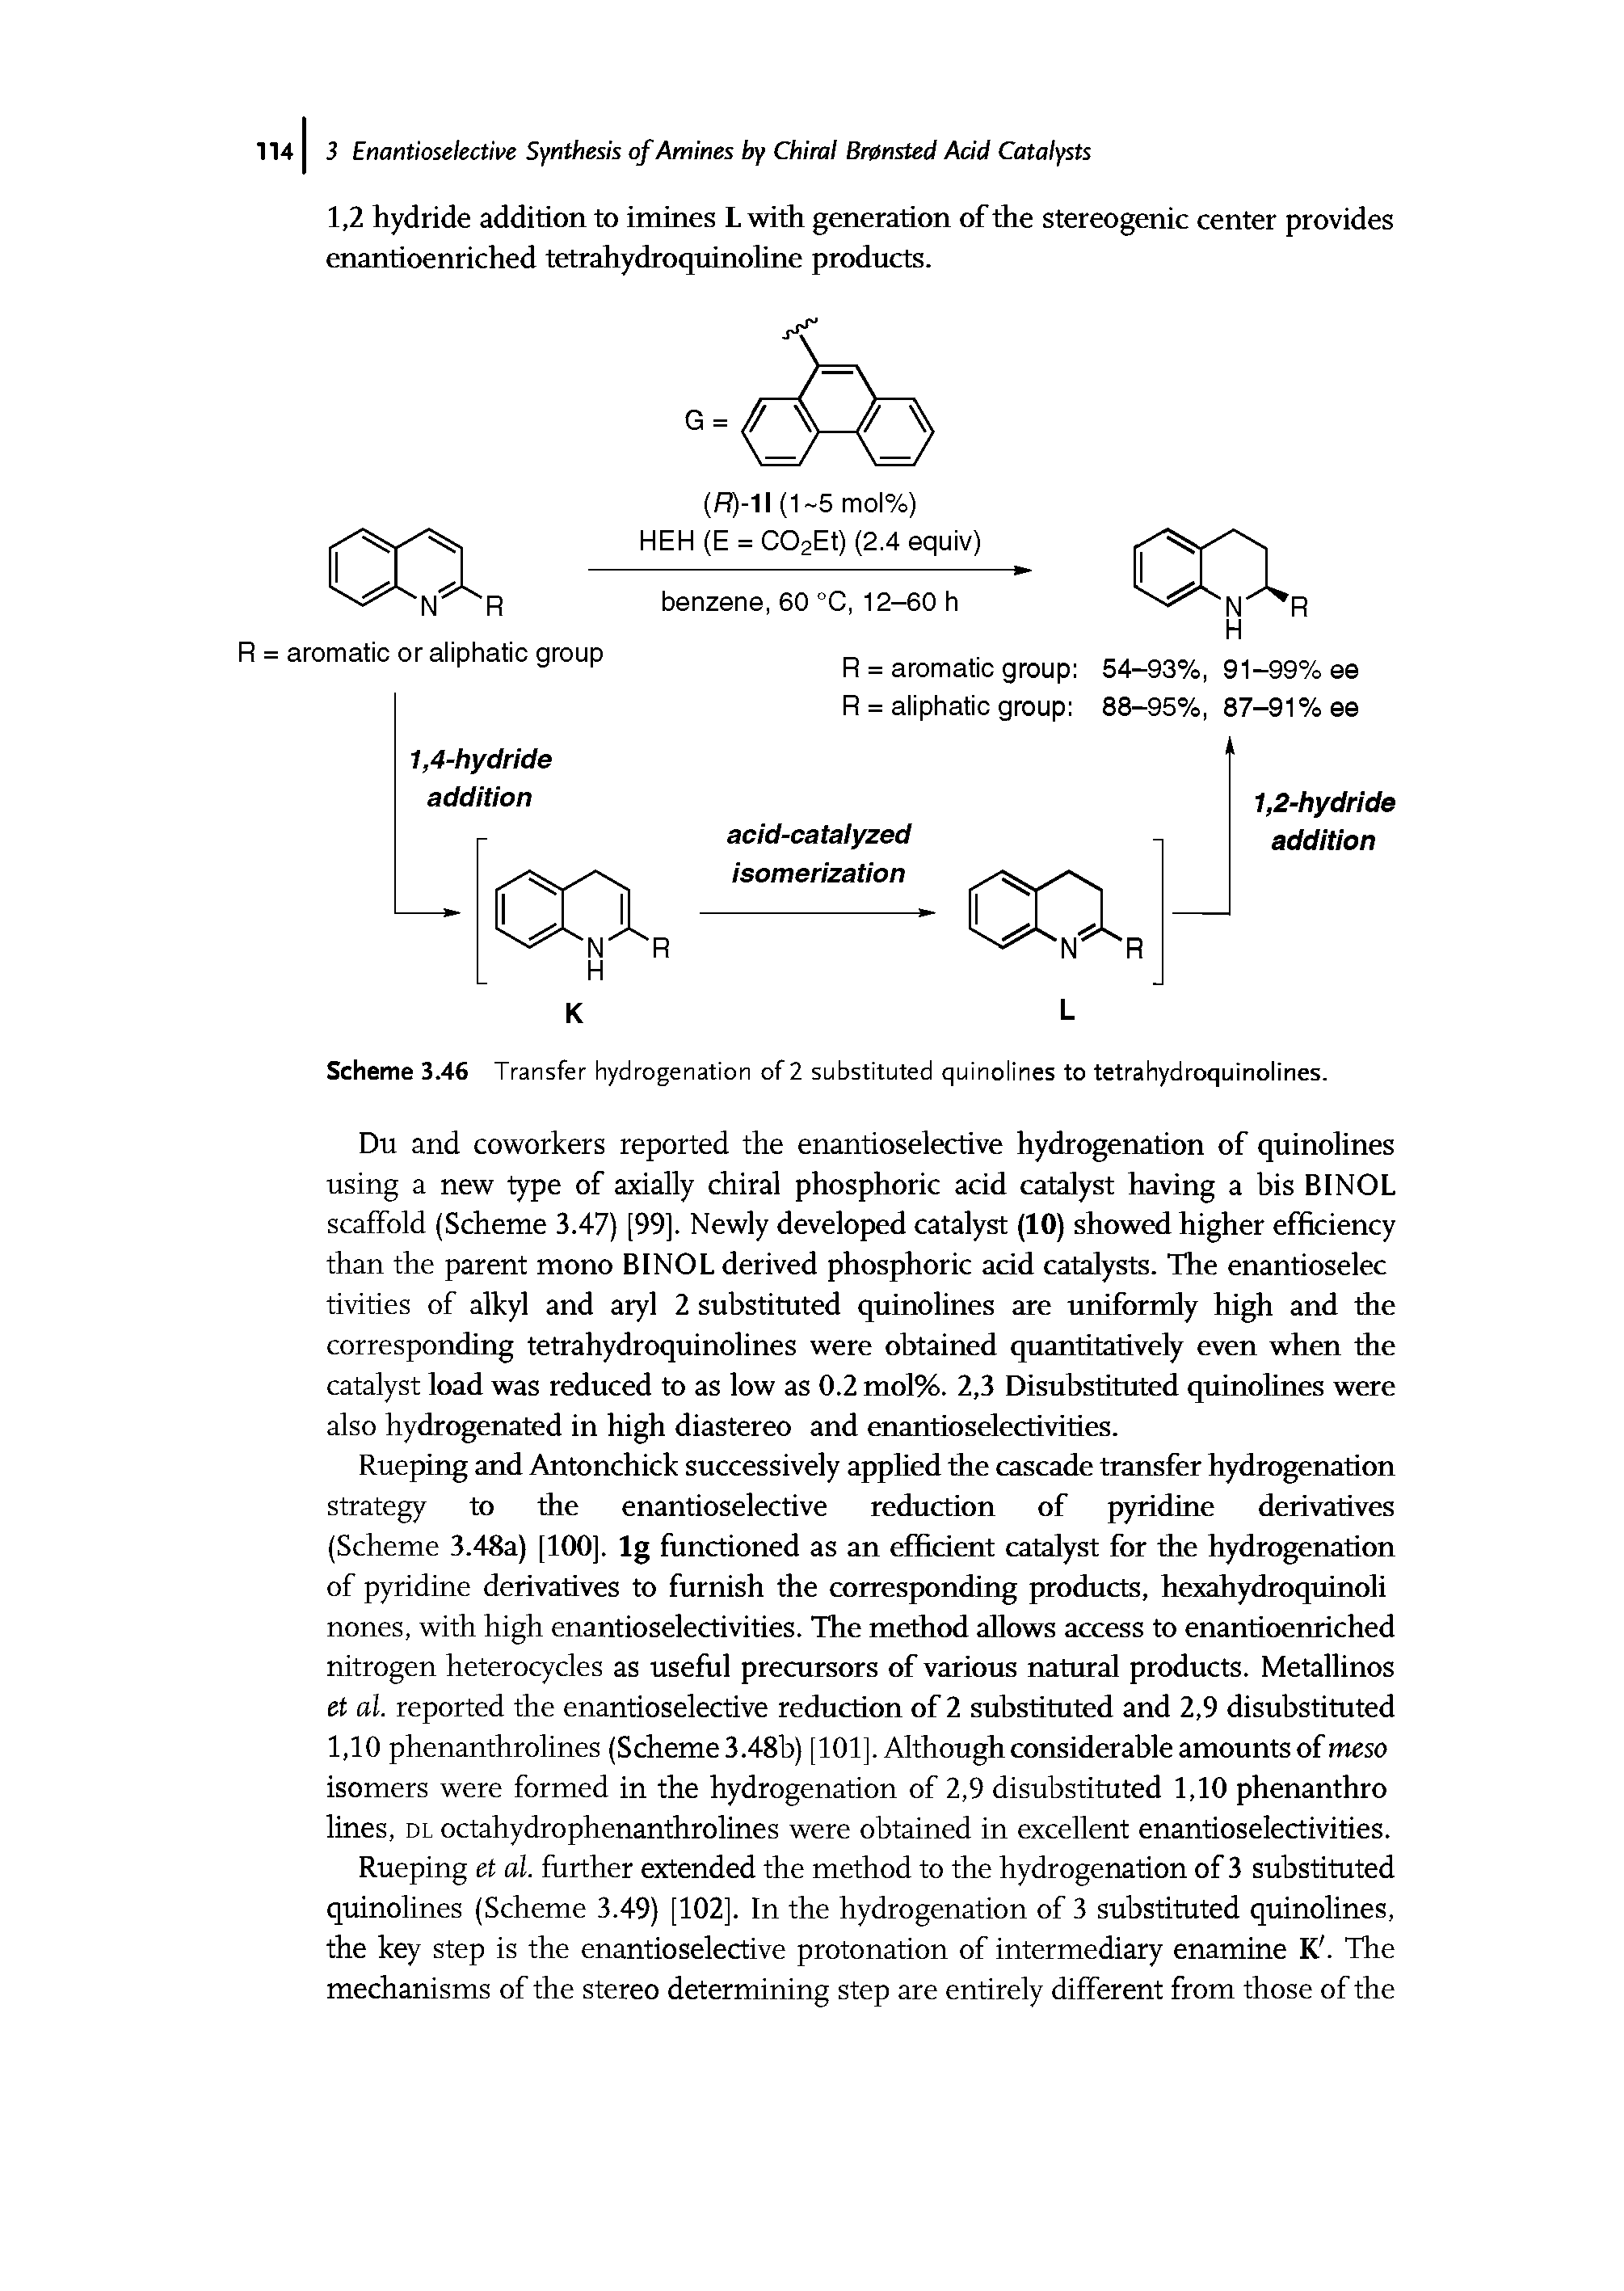 Scheme 3.46 Transfer hydrogenation of 2 substituted quinolines to tetrahydroquinolines.